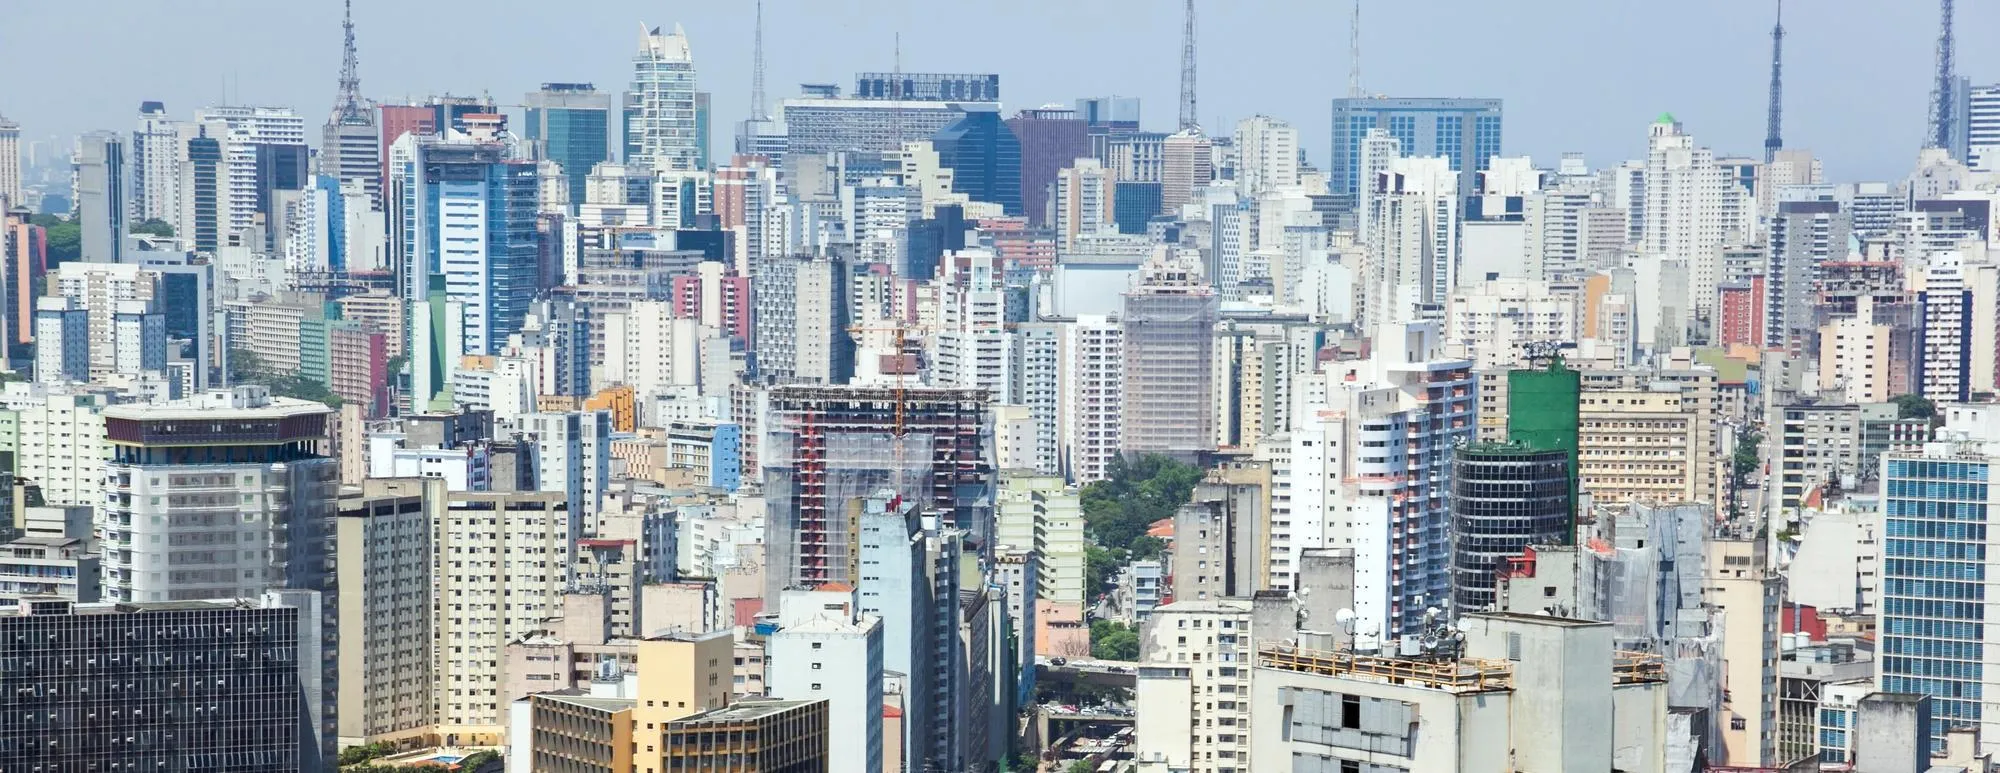 La skyline de São Paulo